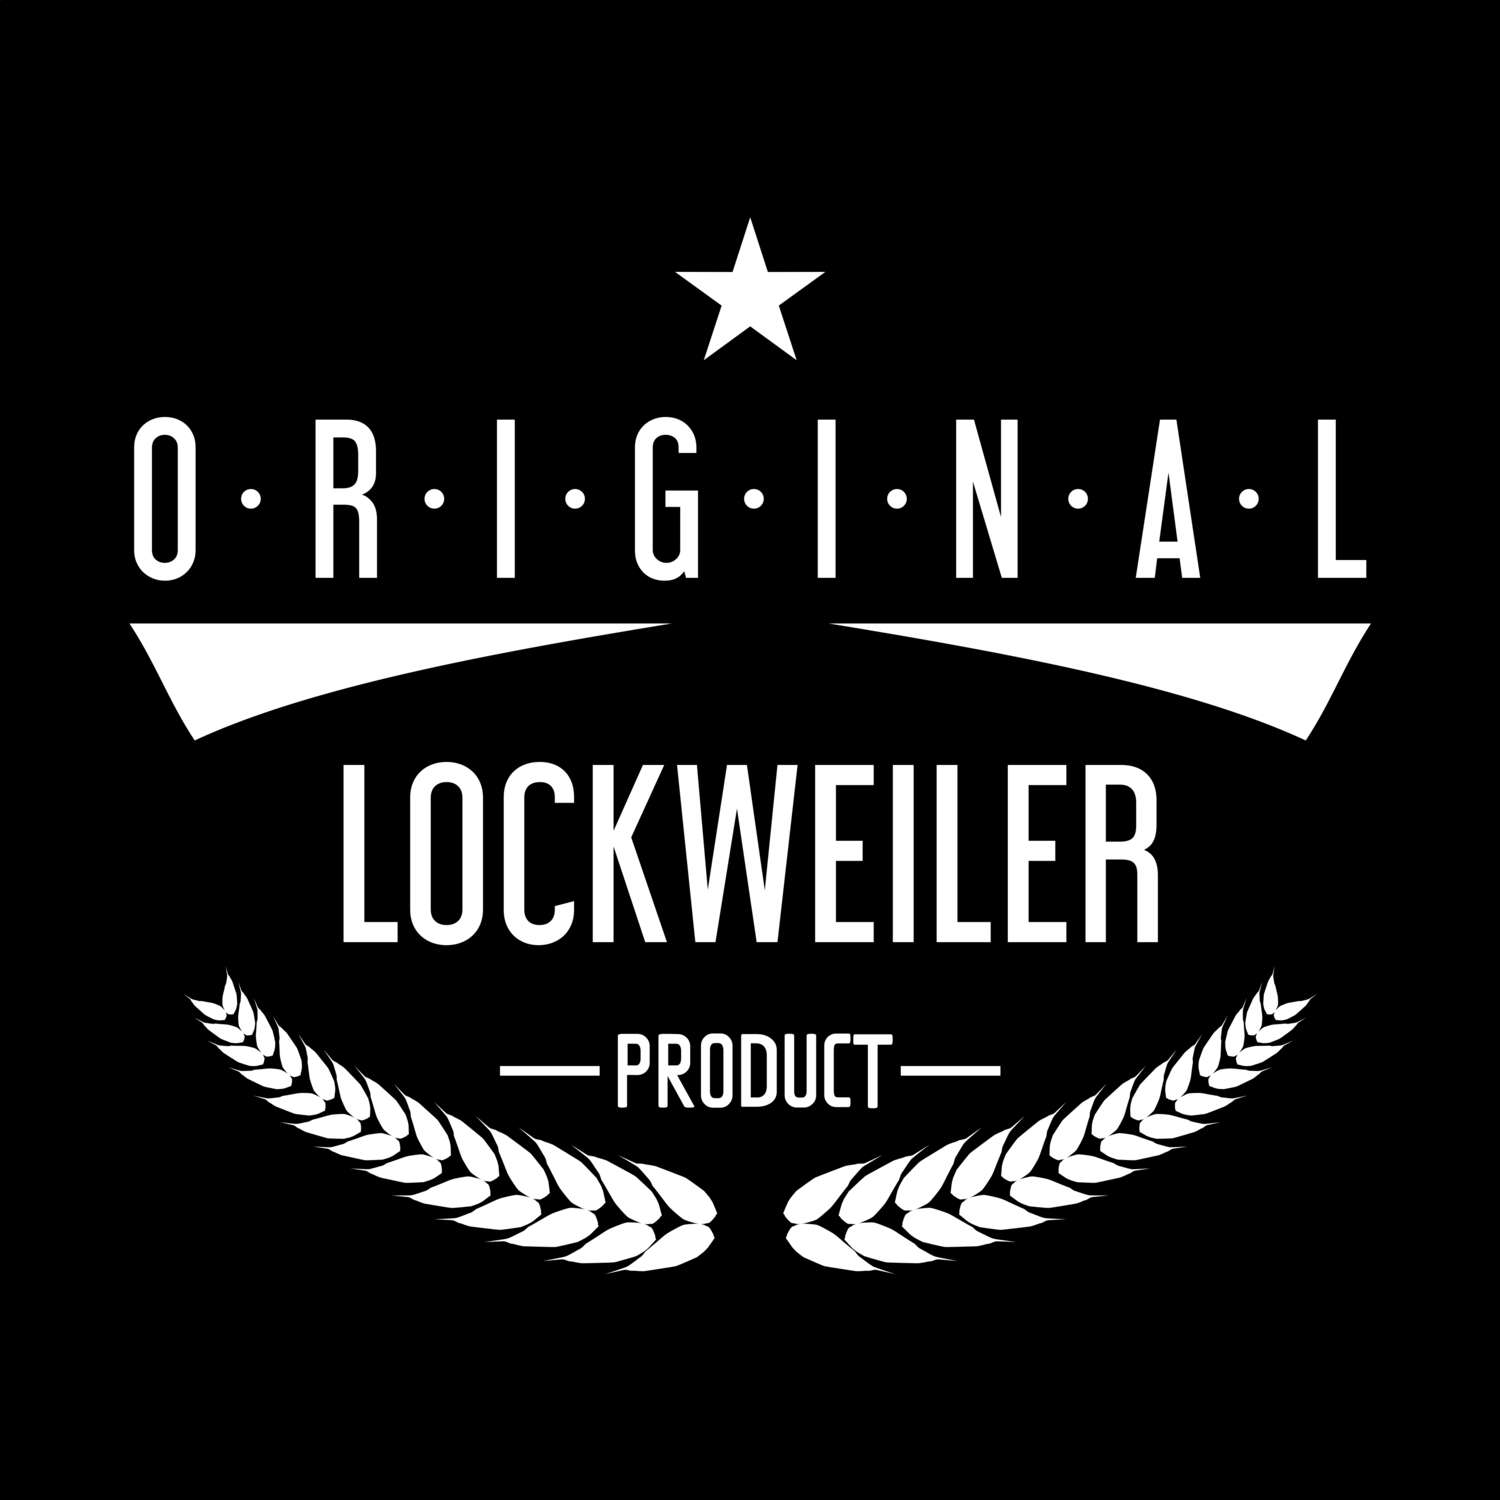 Lockweiler T-Shirt »Original Product«